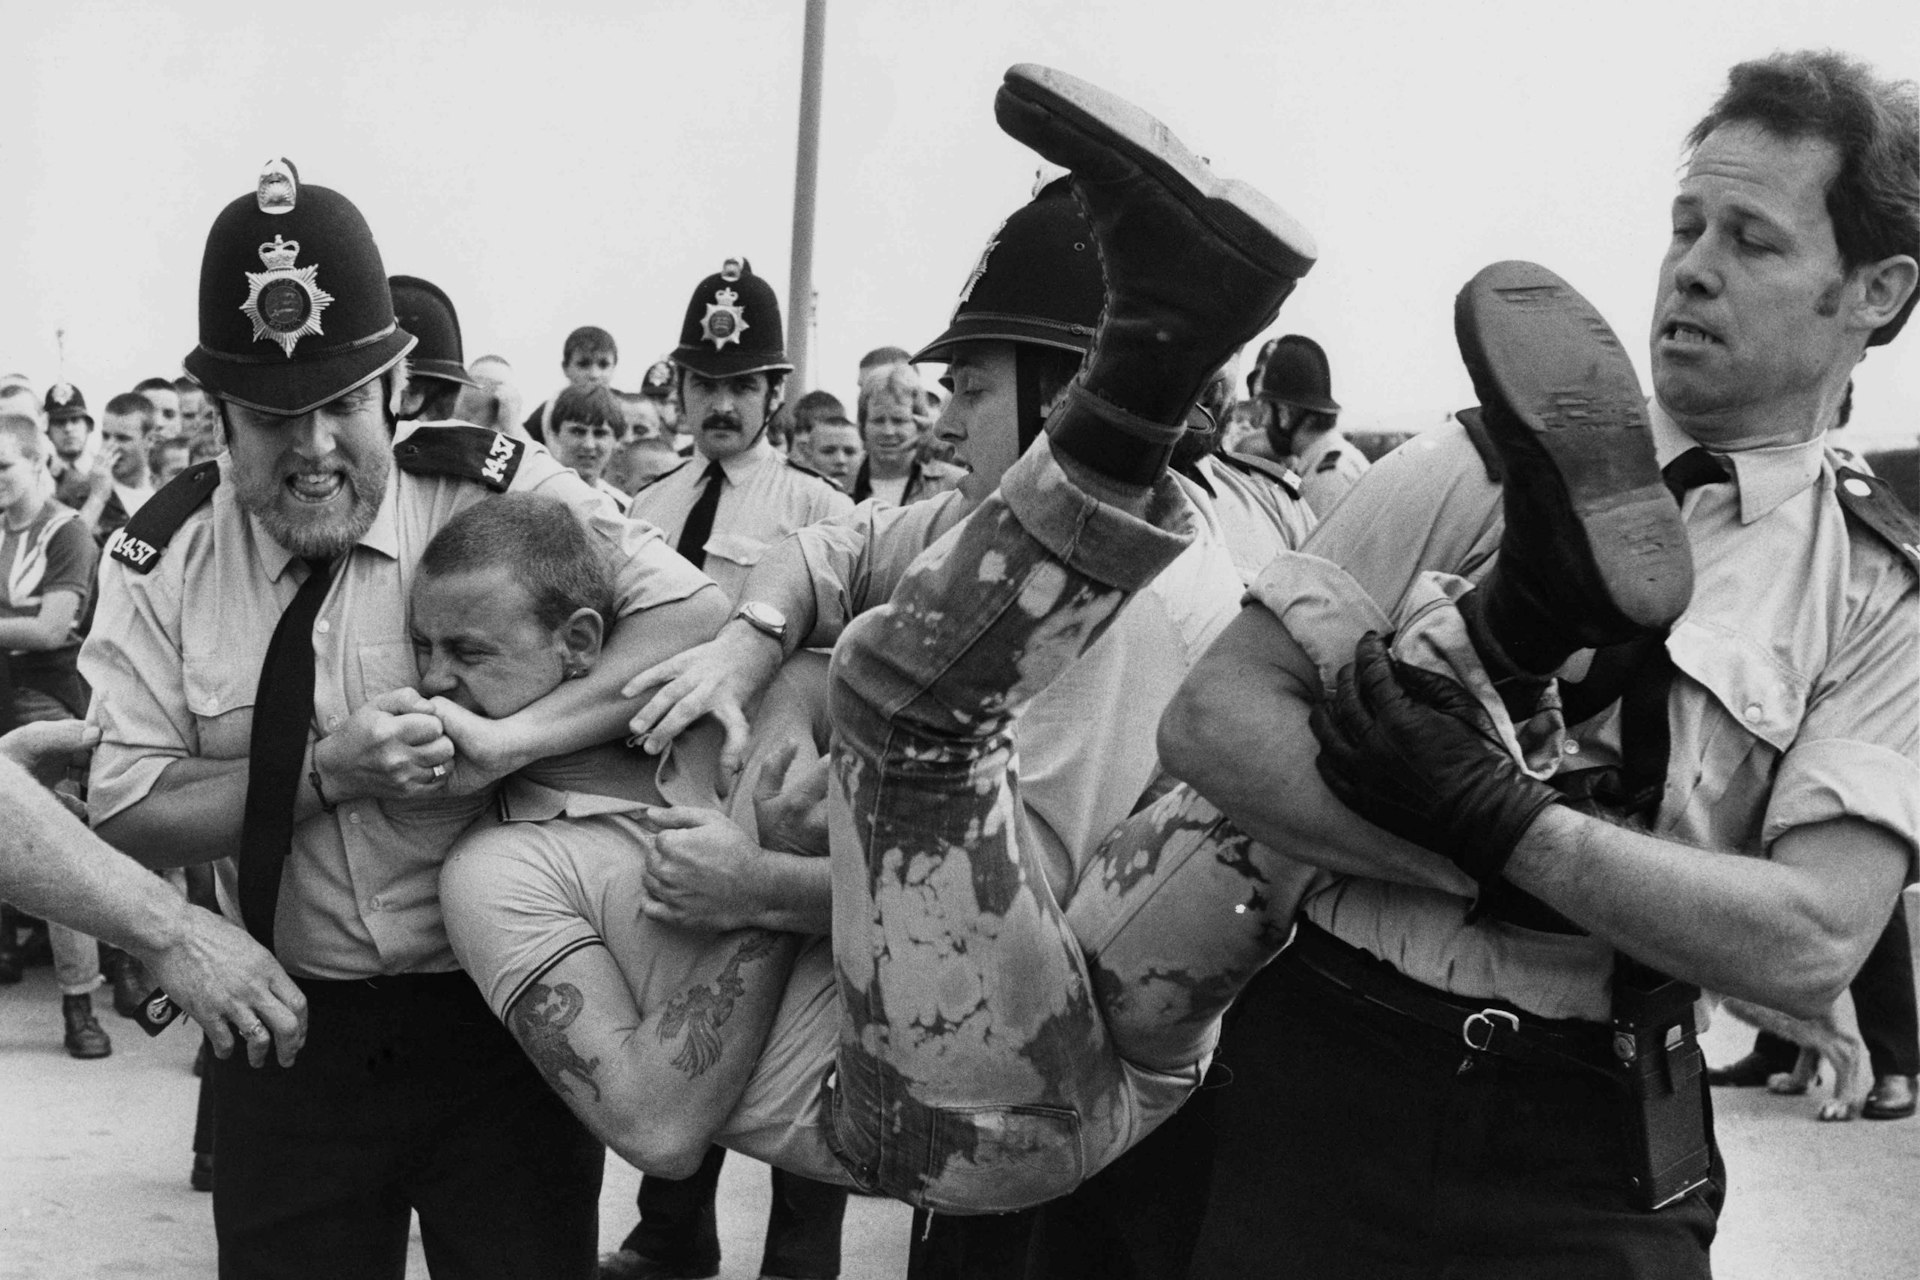 Photographer Dave Benett on shooting skinhead punch-ups